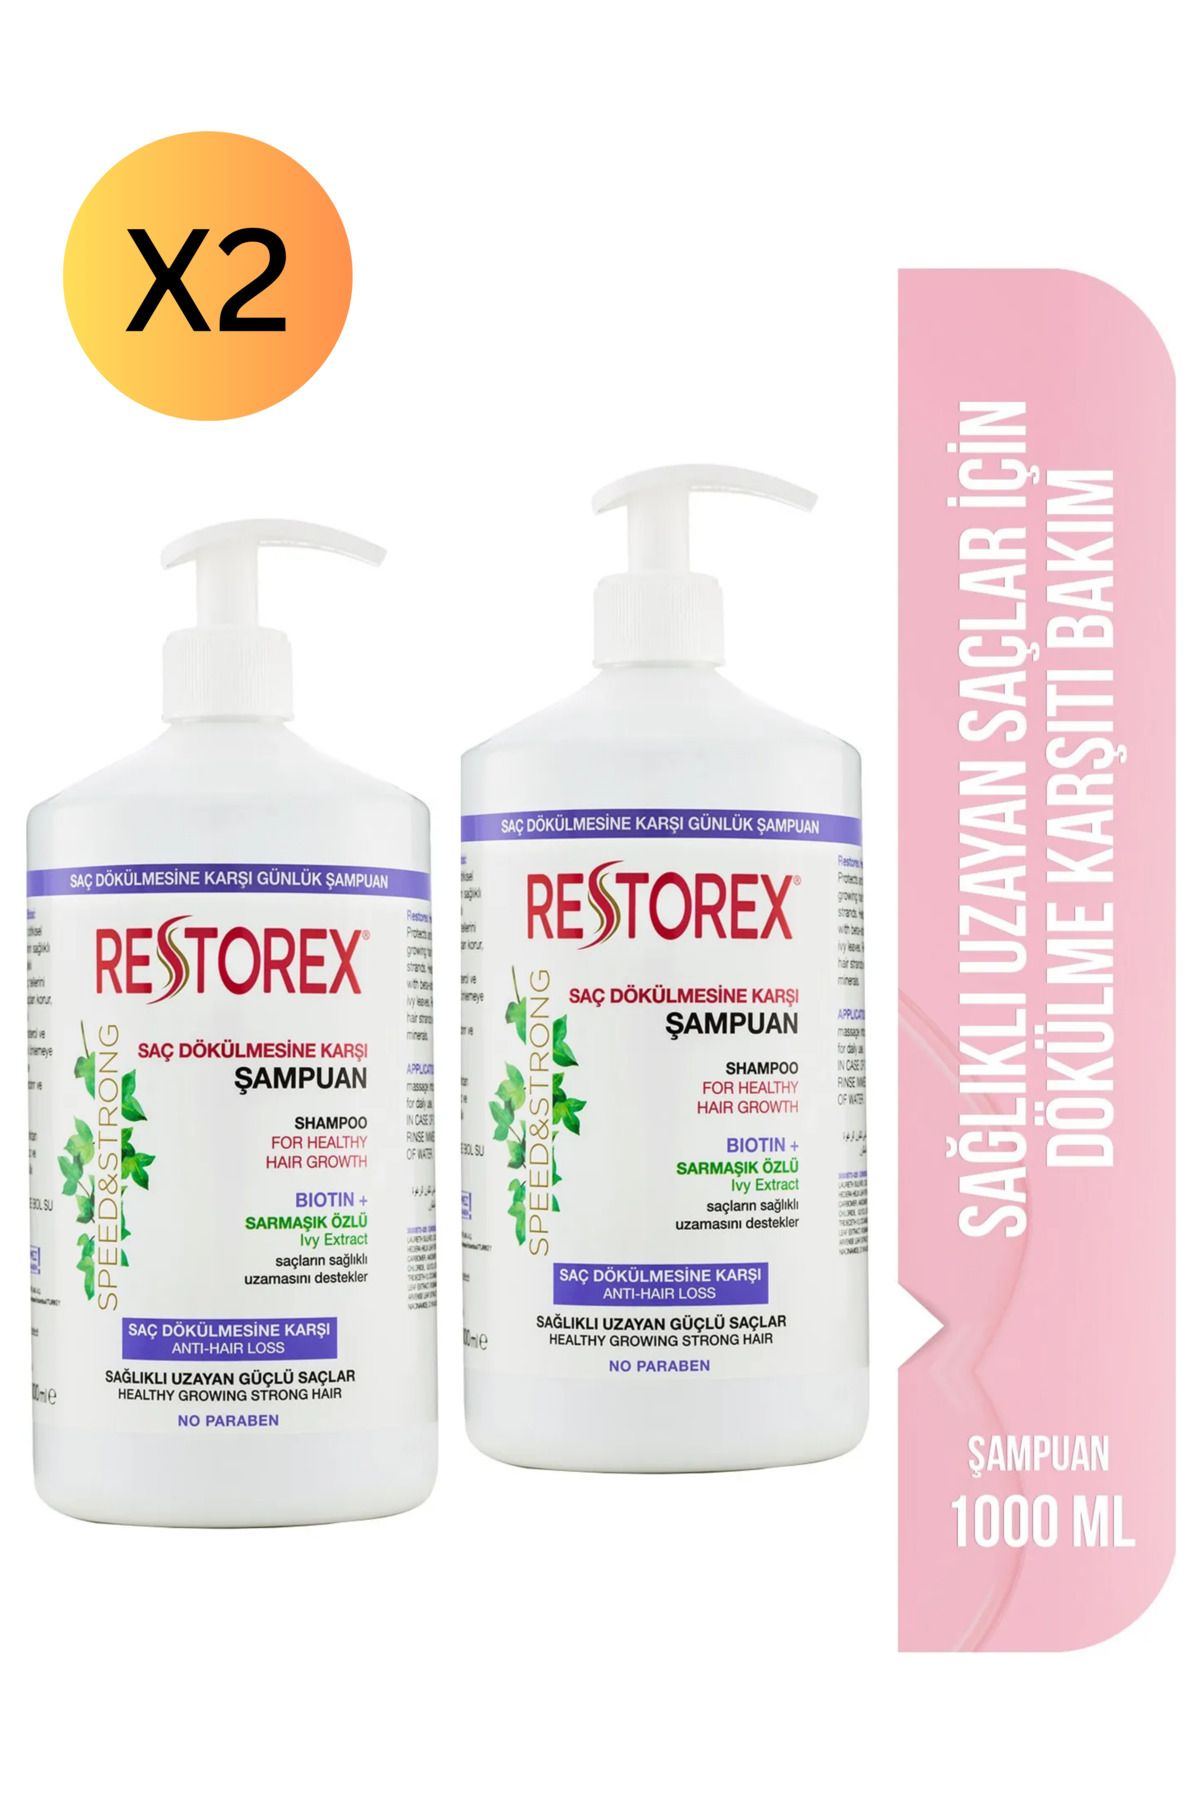 Restorex Saç Dökülmesine Karşı Ekstra Direnç  Şampuan 1000 ml 2 Adet